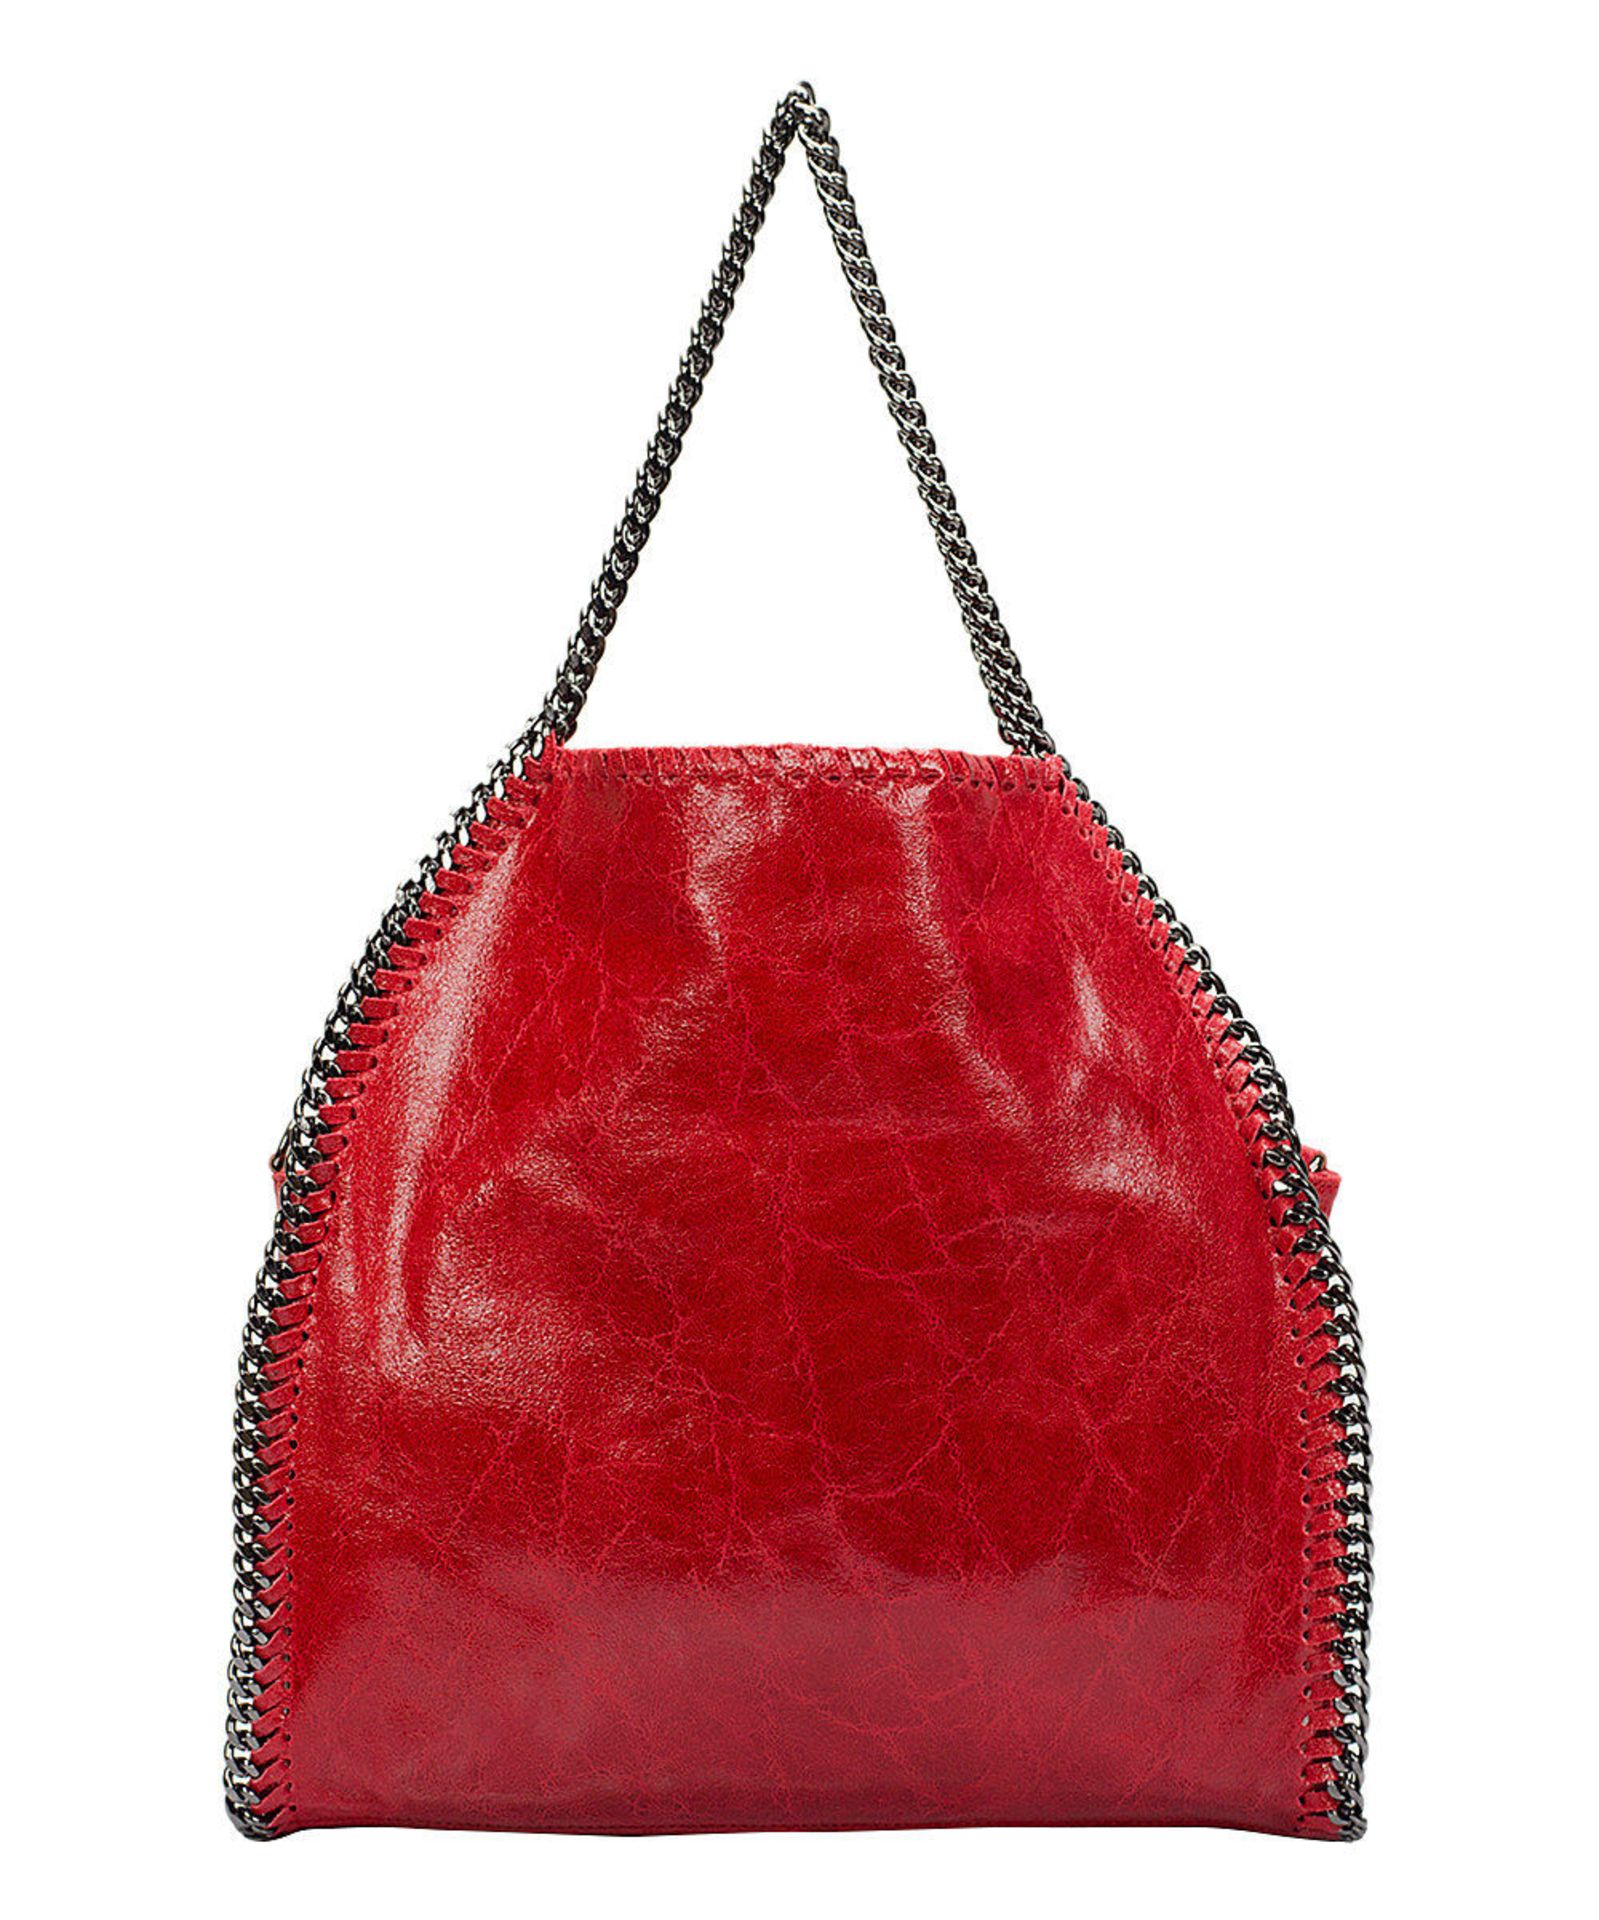 Brand New Markese Bordo Chain Suede Hobo Handbag (Ref: 35035912 BAG SHELF) - Image 2 of 4